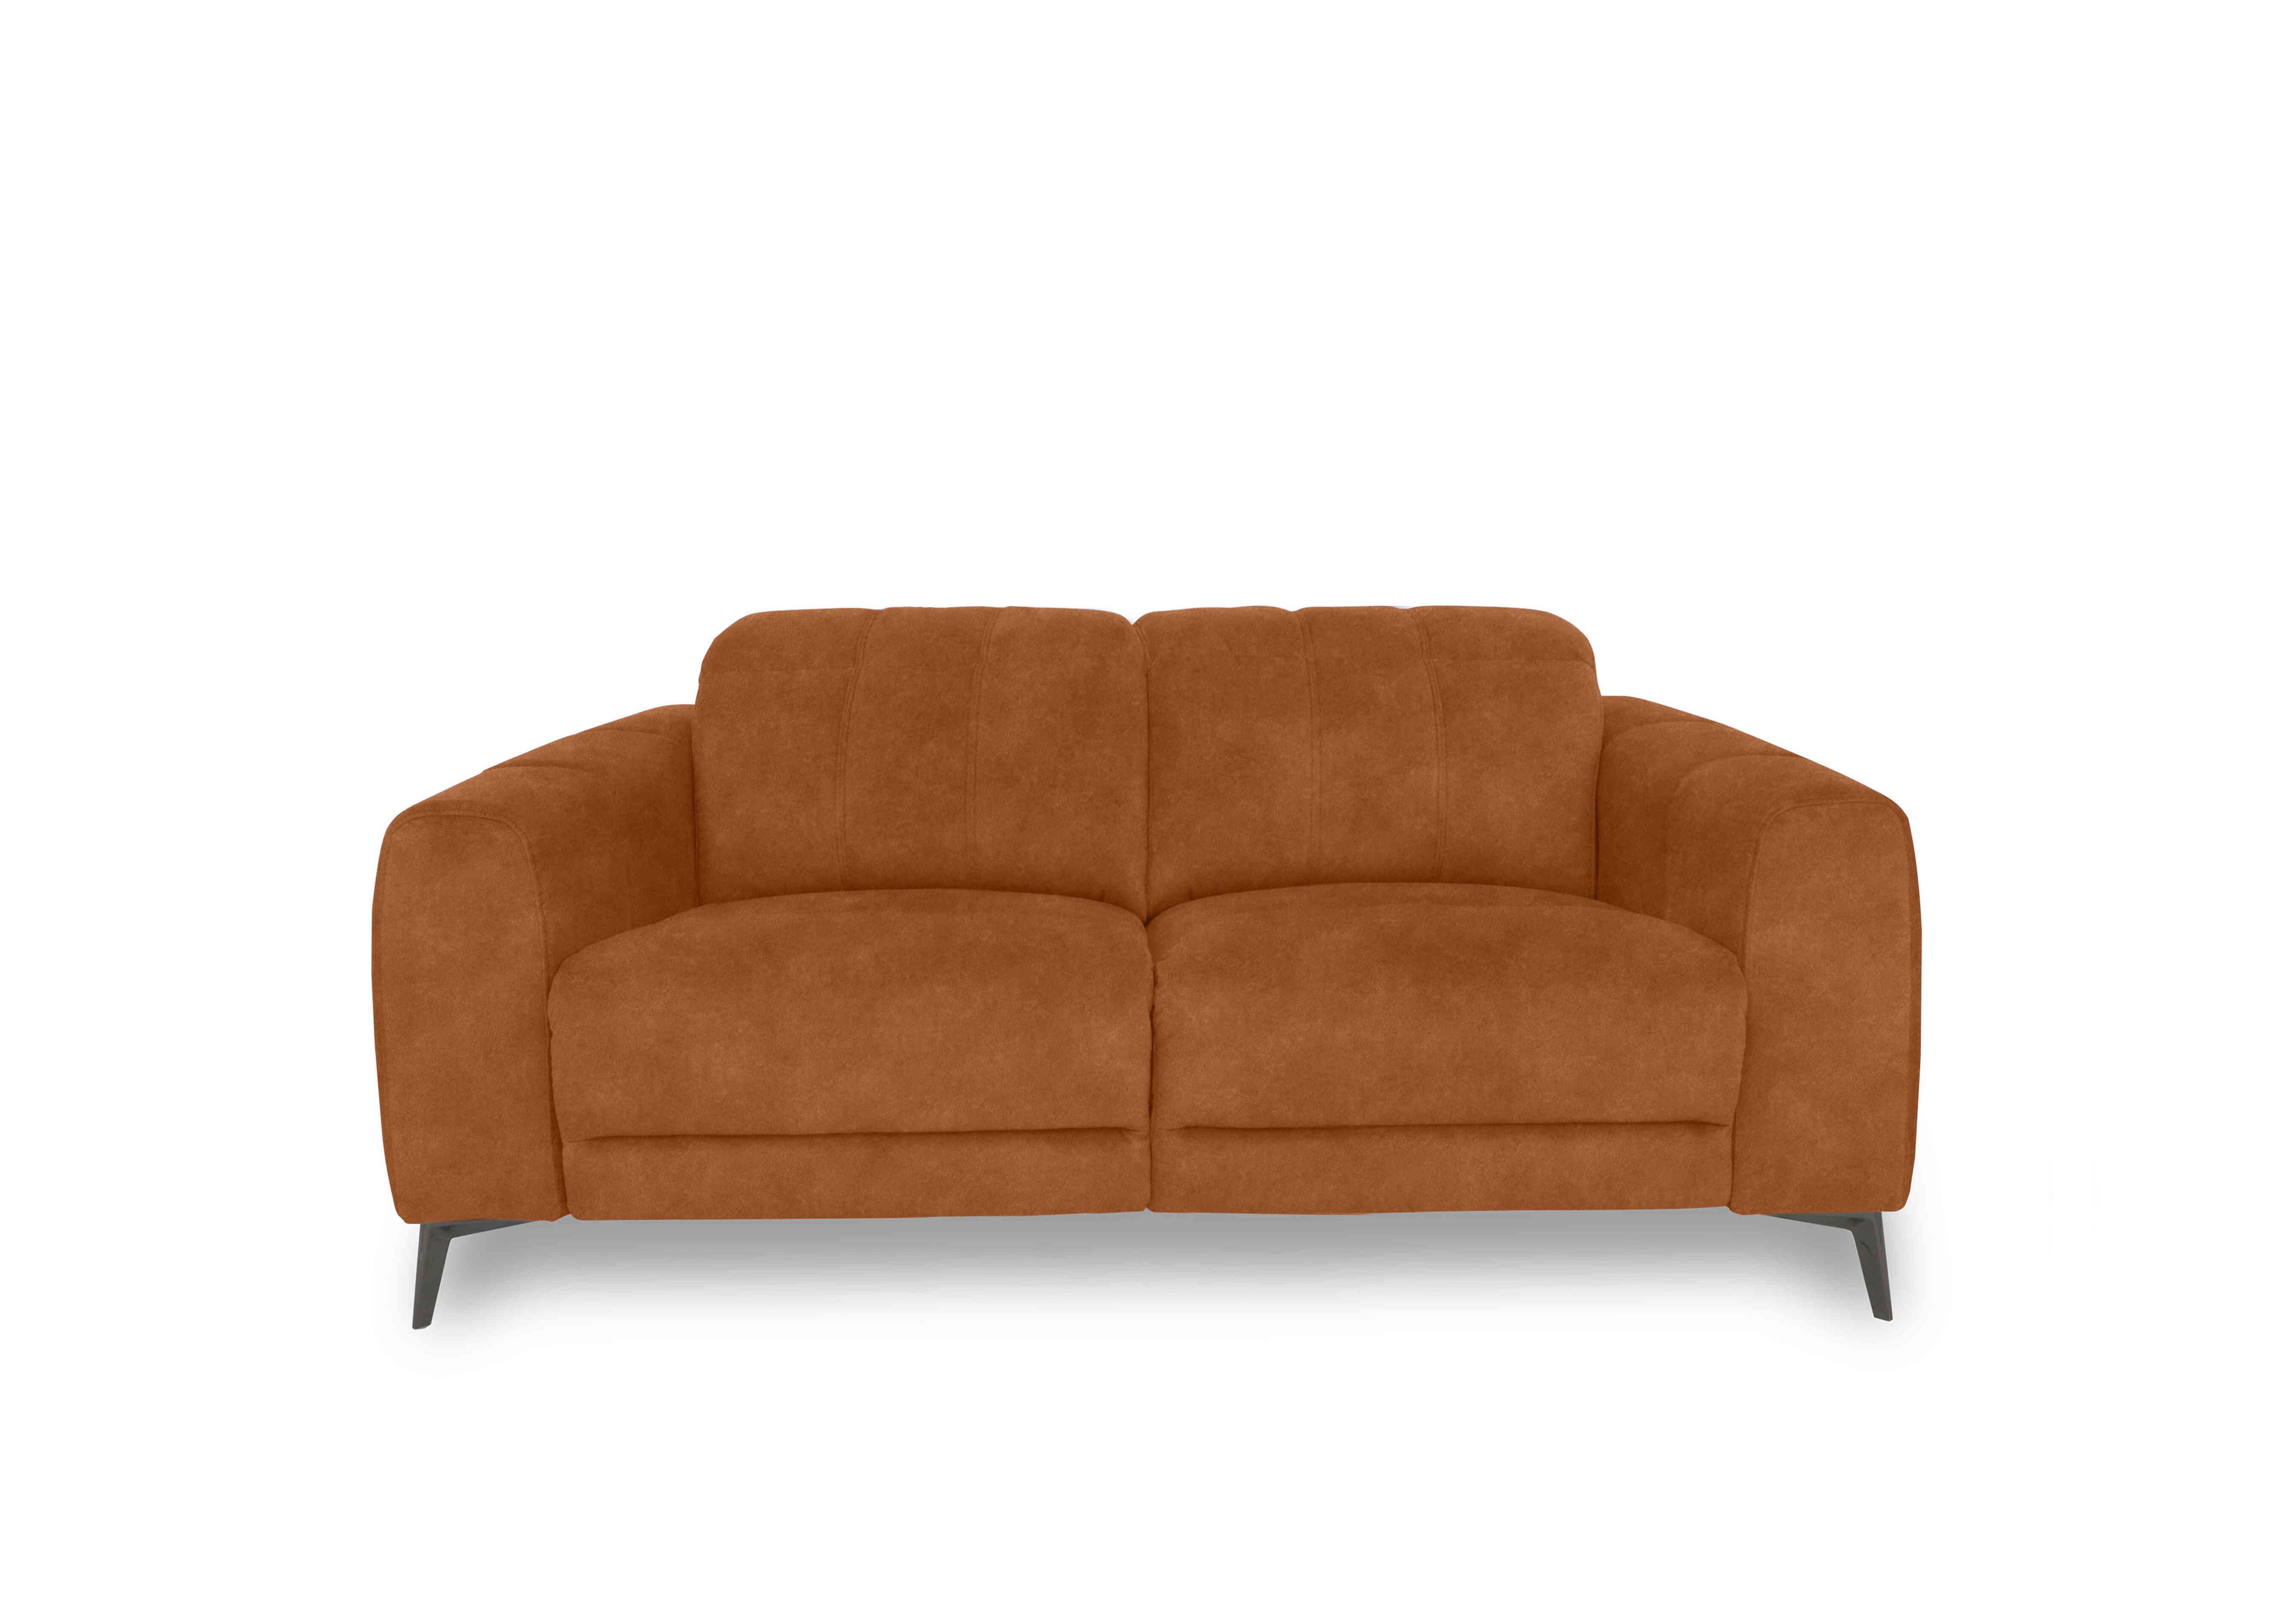 Ezra 2 Seater Fabric Sofa in Dexter 43509 Pumpkin on Furniture Village